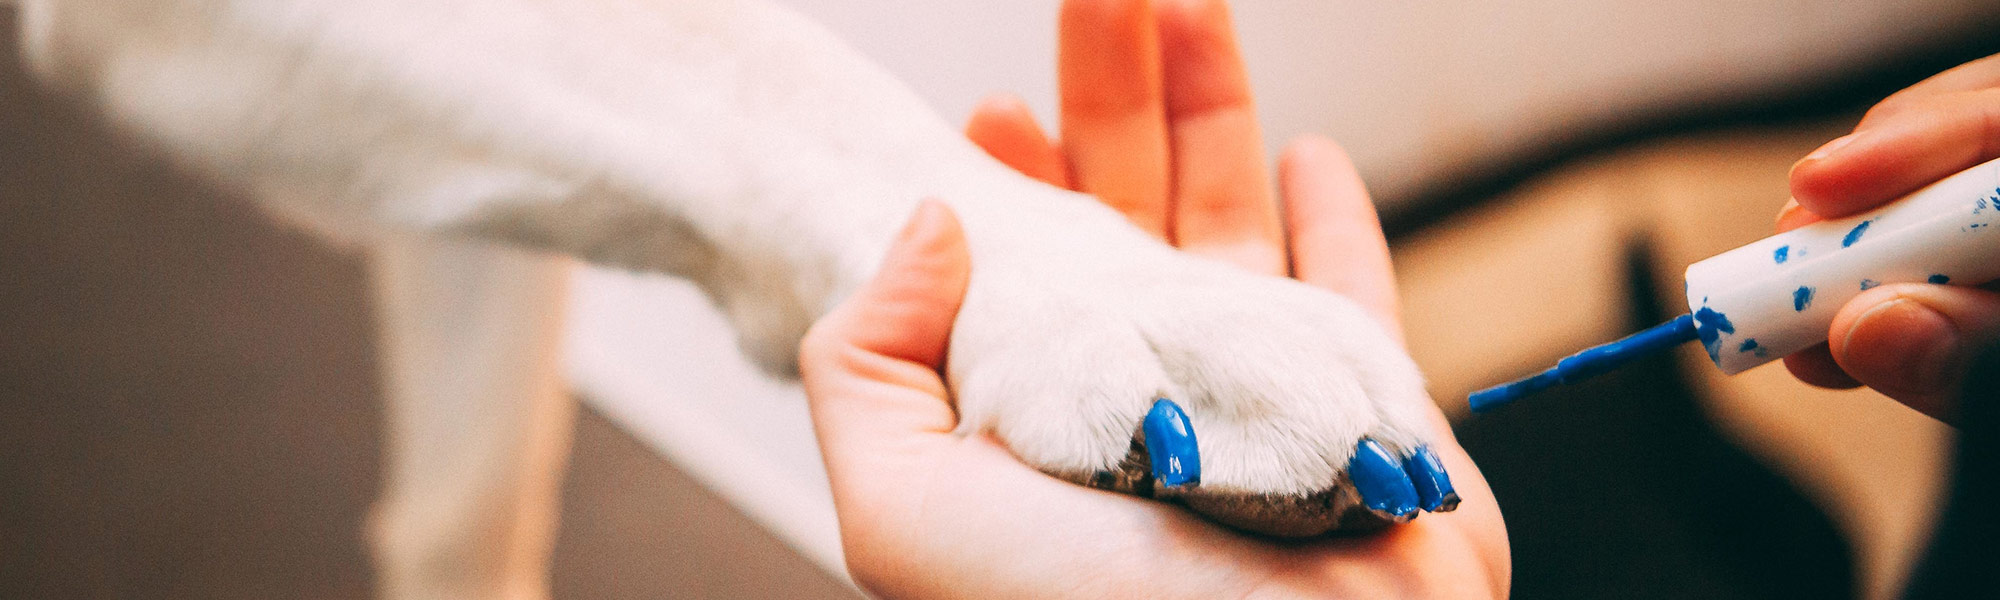 image of groomer painting dog's nails blue